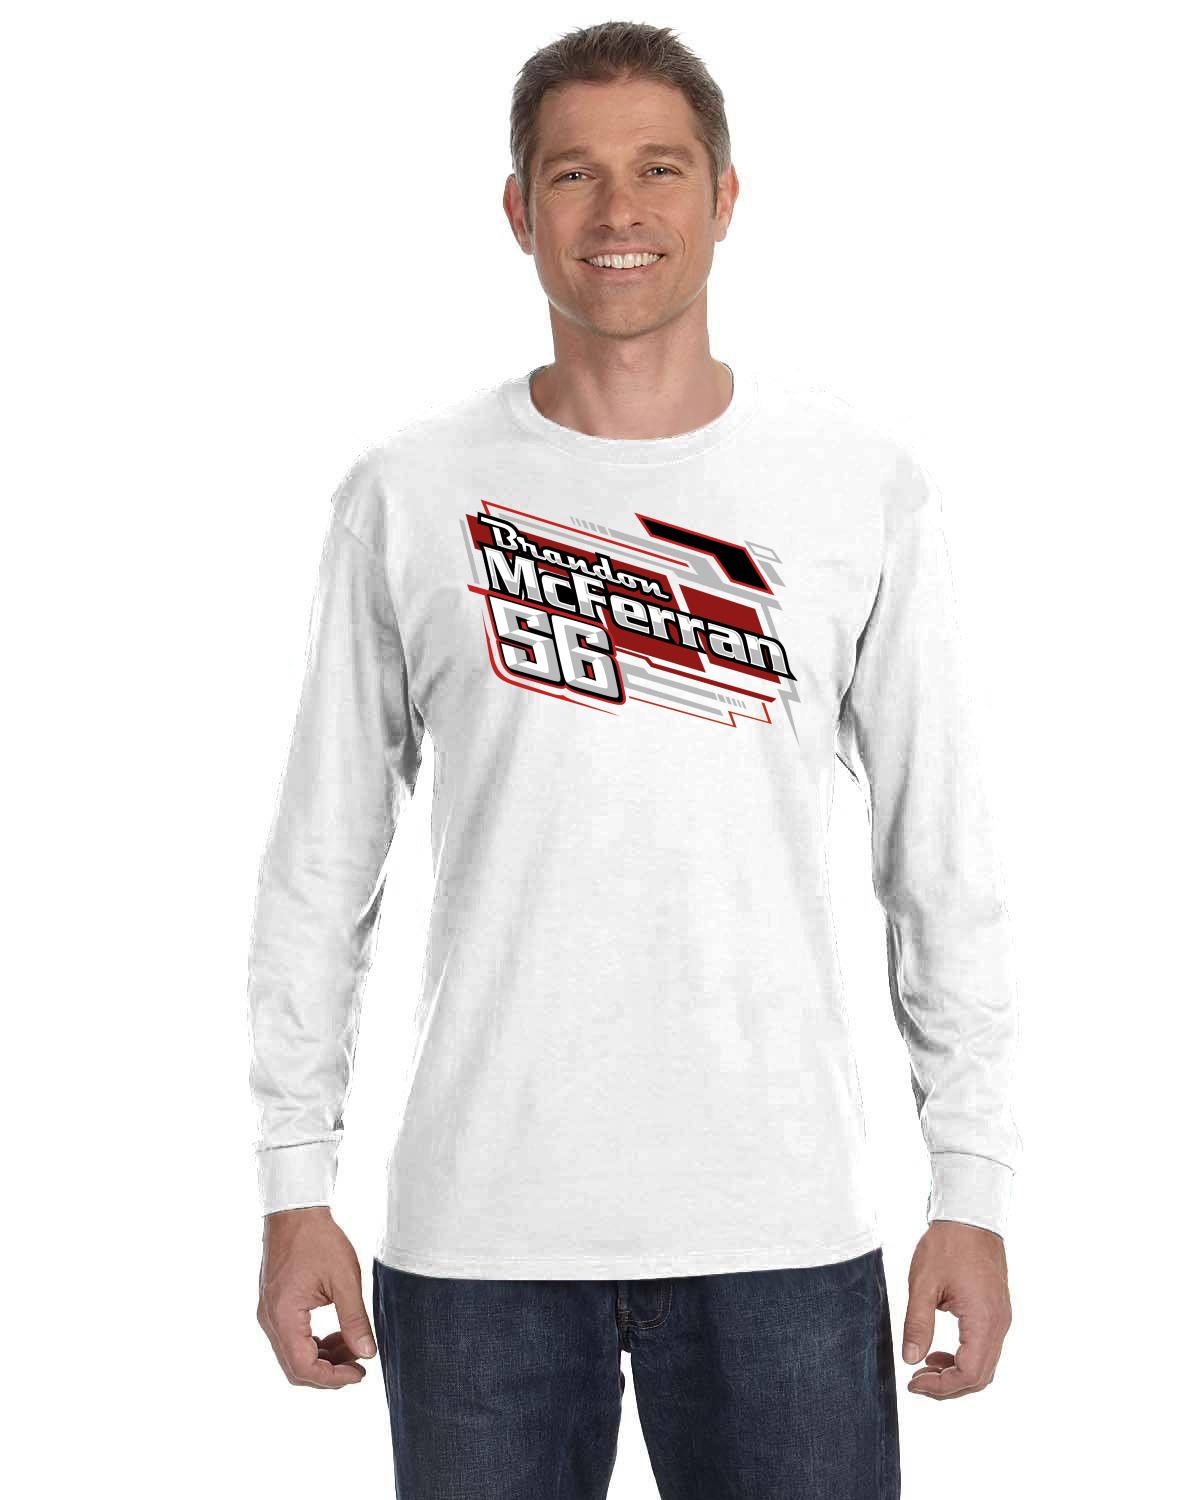 Brandon McFerran Racing Adult long sleeve shirt